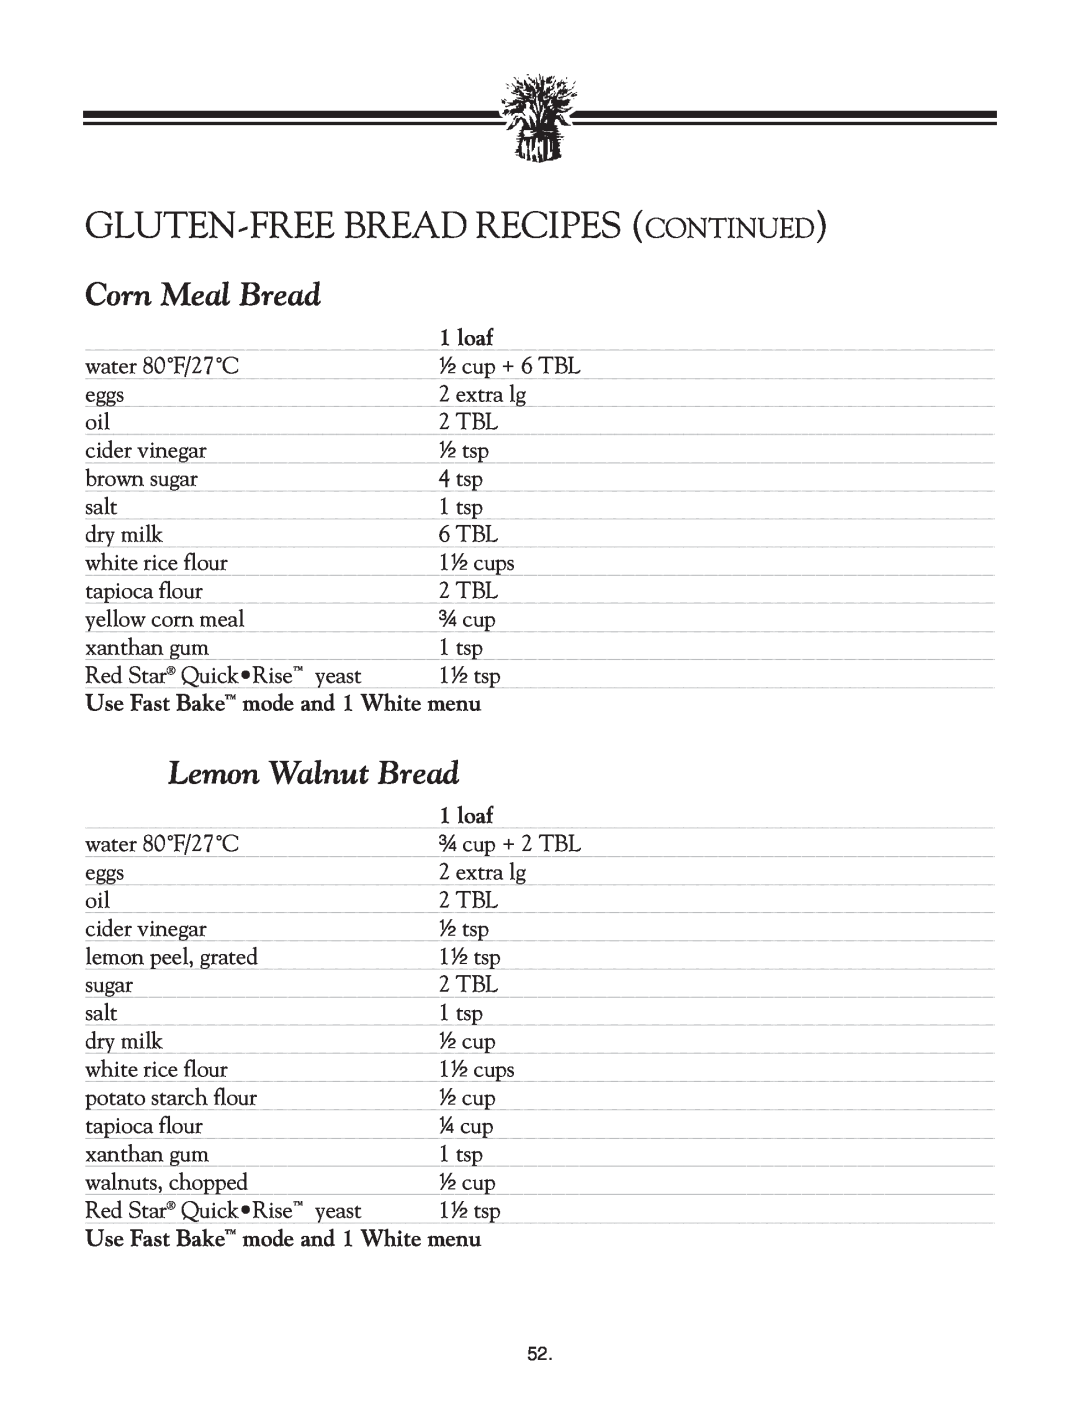 Breadman TR2828G instruction manual Corn Meal Bread, Lemon Walnut Bread, Gluten-Freebread Recipes Continued 